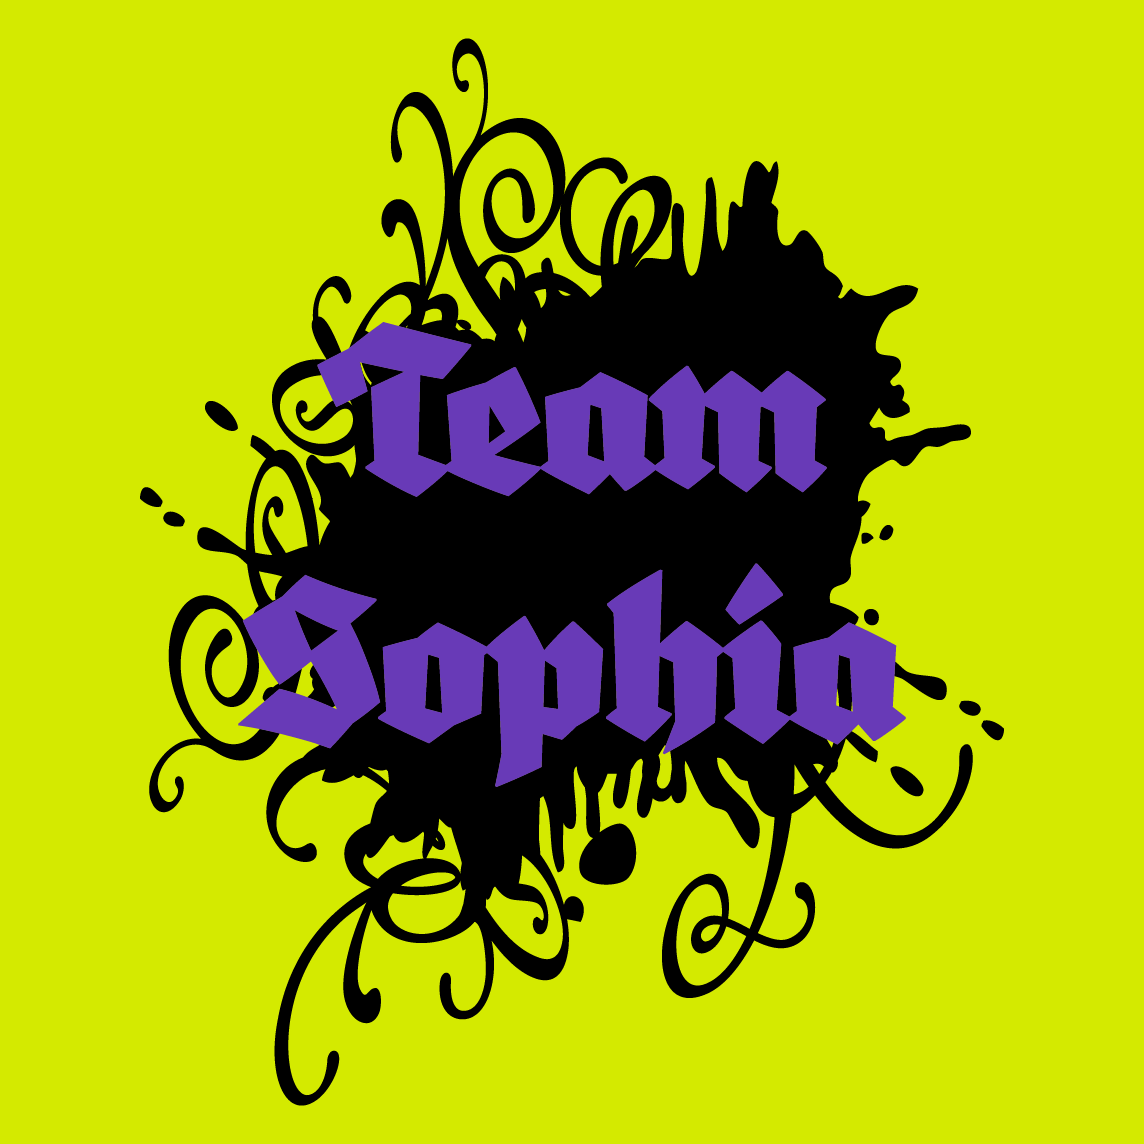 March of Dimes Team Sophia fundraiser shirt design - zoomed